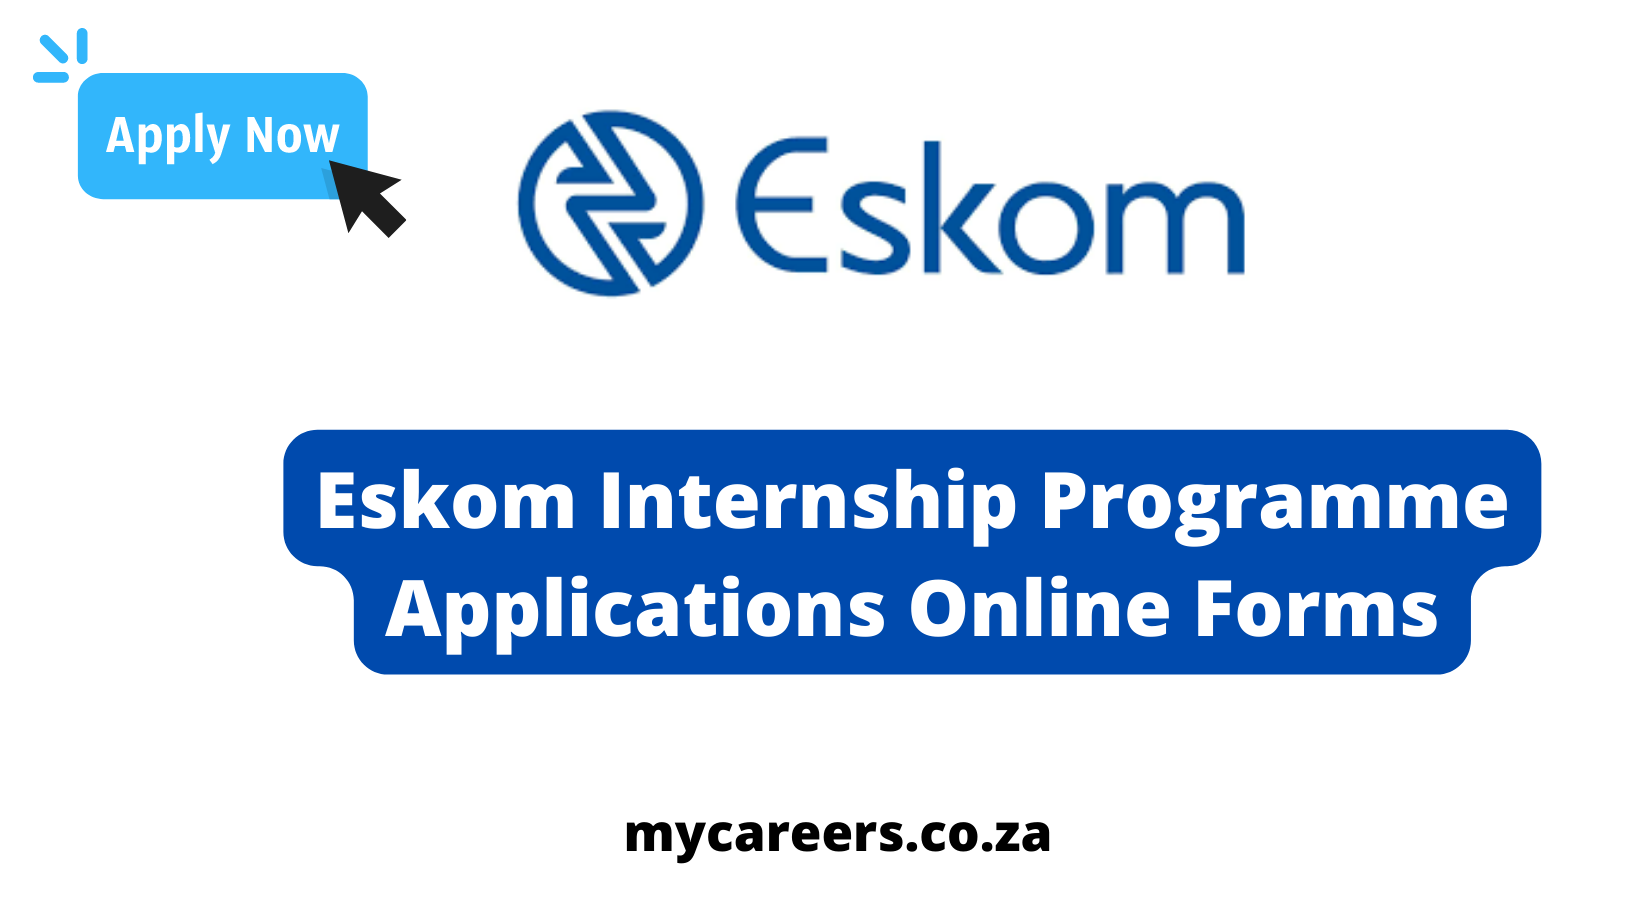 Eskom Internship Programme Applications Online Forms